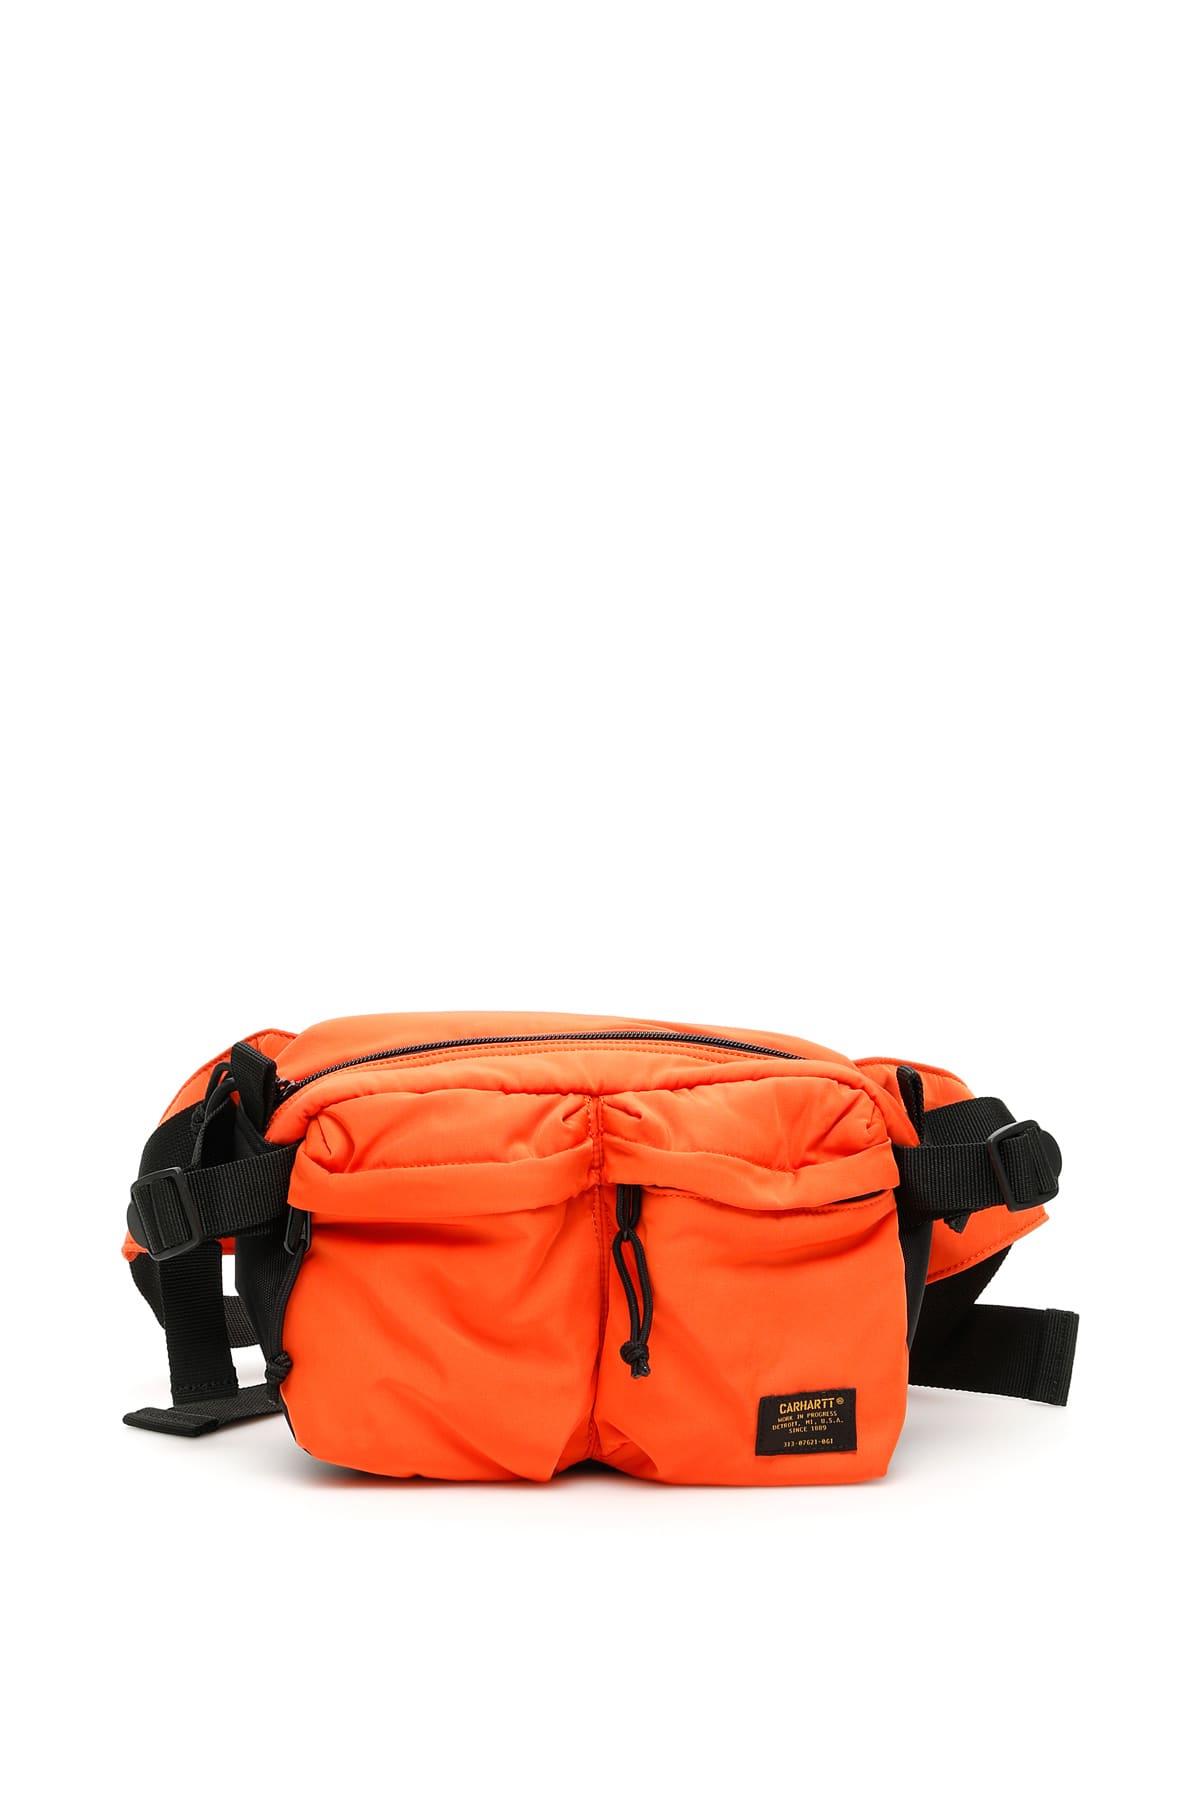 Carhartt Synthetic Wip Military Hip Bag in Orange,Black (Orange) for ...